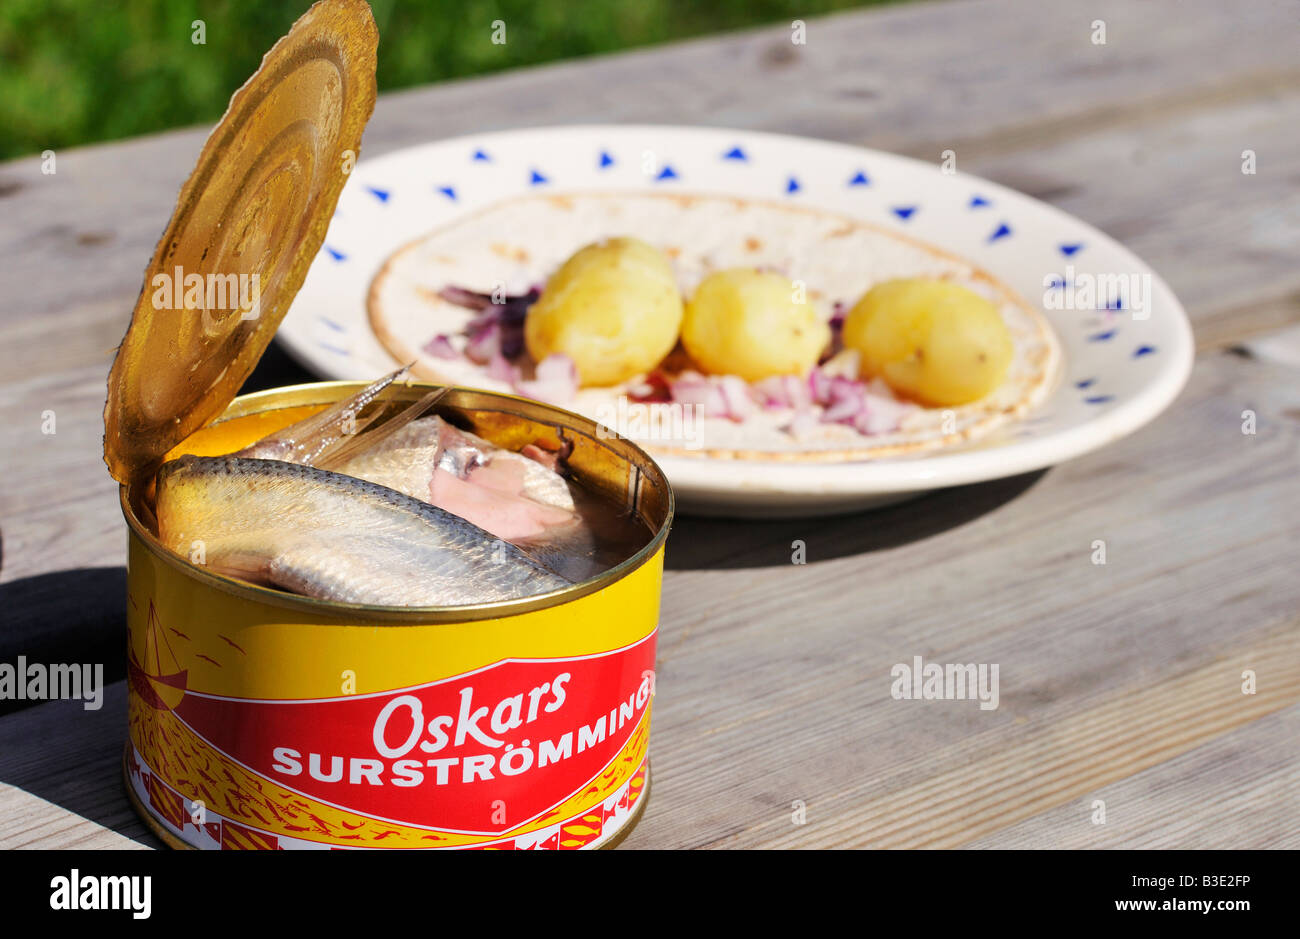 NAMI-NAMI: a food blog: Surströmming and surströmmingfest (Swedish  fermented herring)